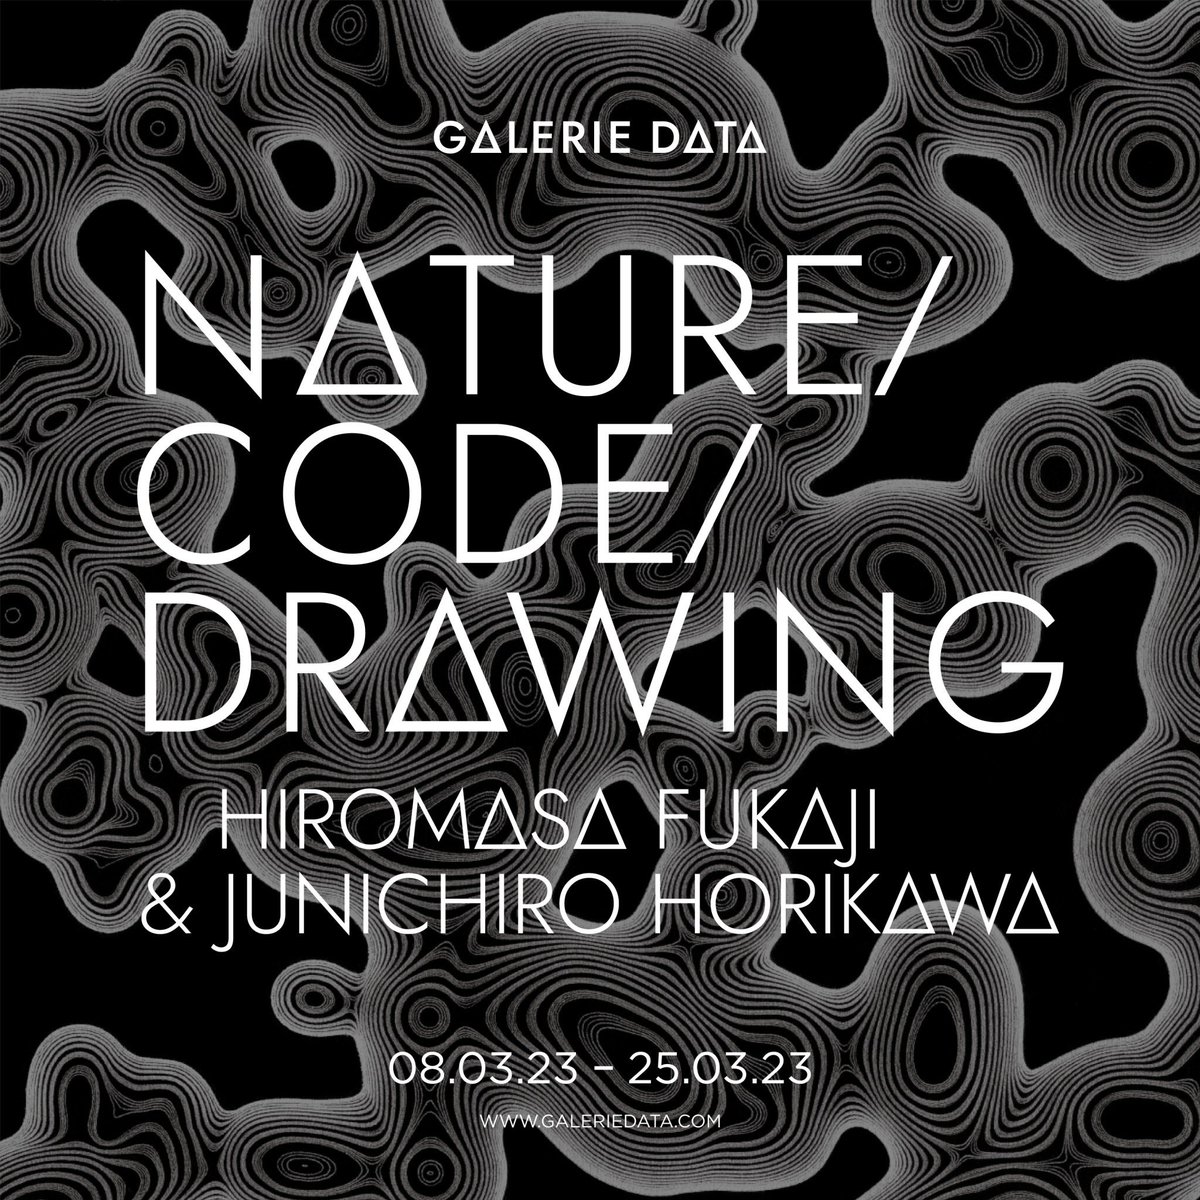 We will be exhibiting in Paris🔥
パリで展示します🔥

堀川淳一郎さんとのコラボ作品集「NATURE/CODE/DRAWING」の英語版出版を記念し、フランス・パリのギャラリー「GALERIE DATA」@DataGalerie にて、展示を開催することになりました。お近くの方はぜひ🏃🏃
galeriedata.com